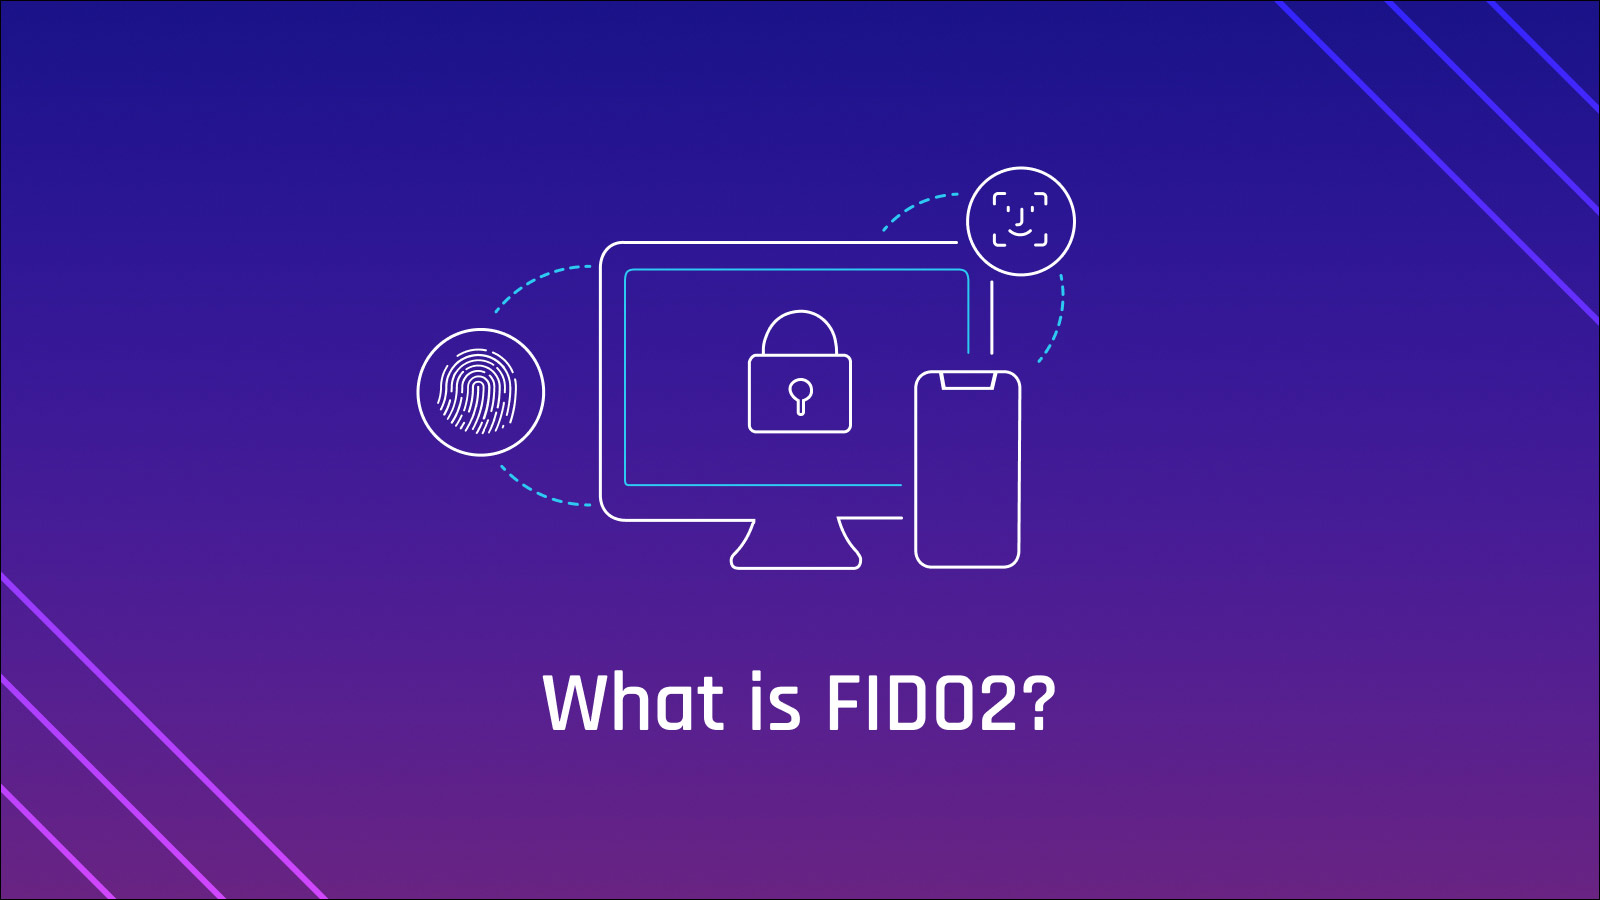 FIDO Certified Biometric Authentication Software